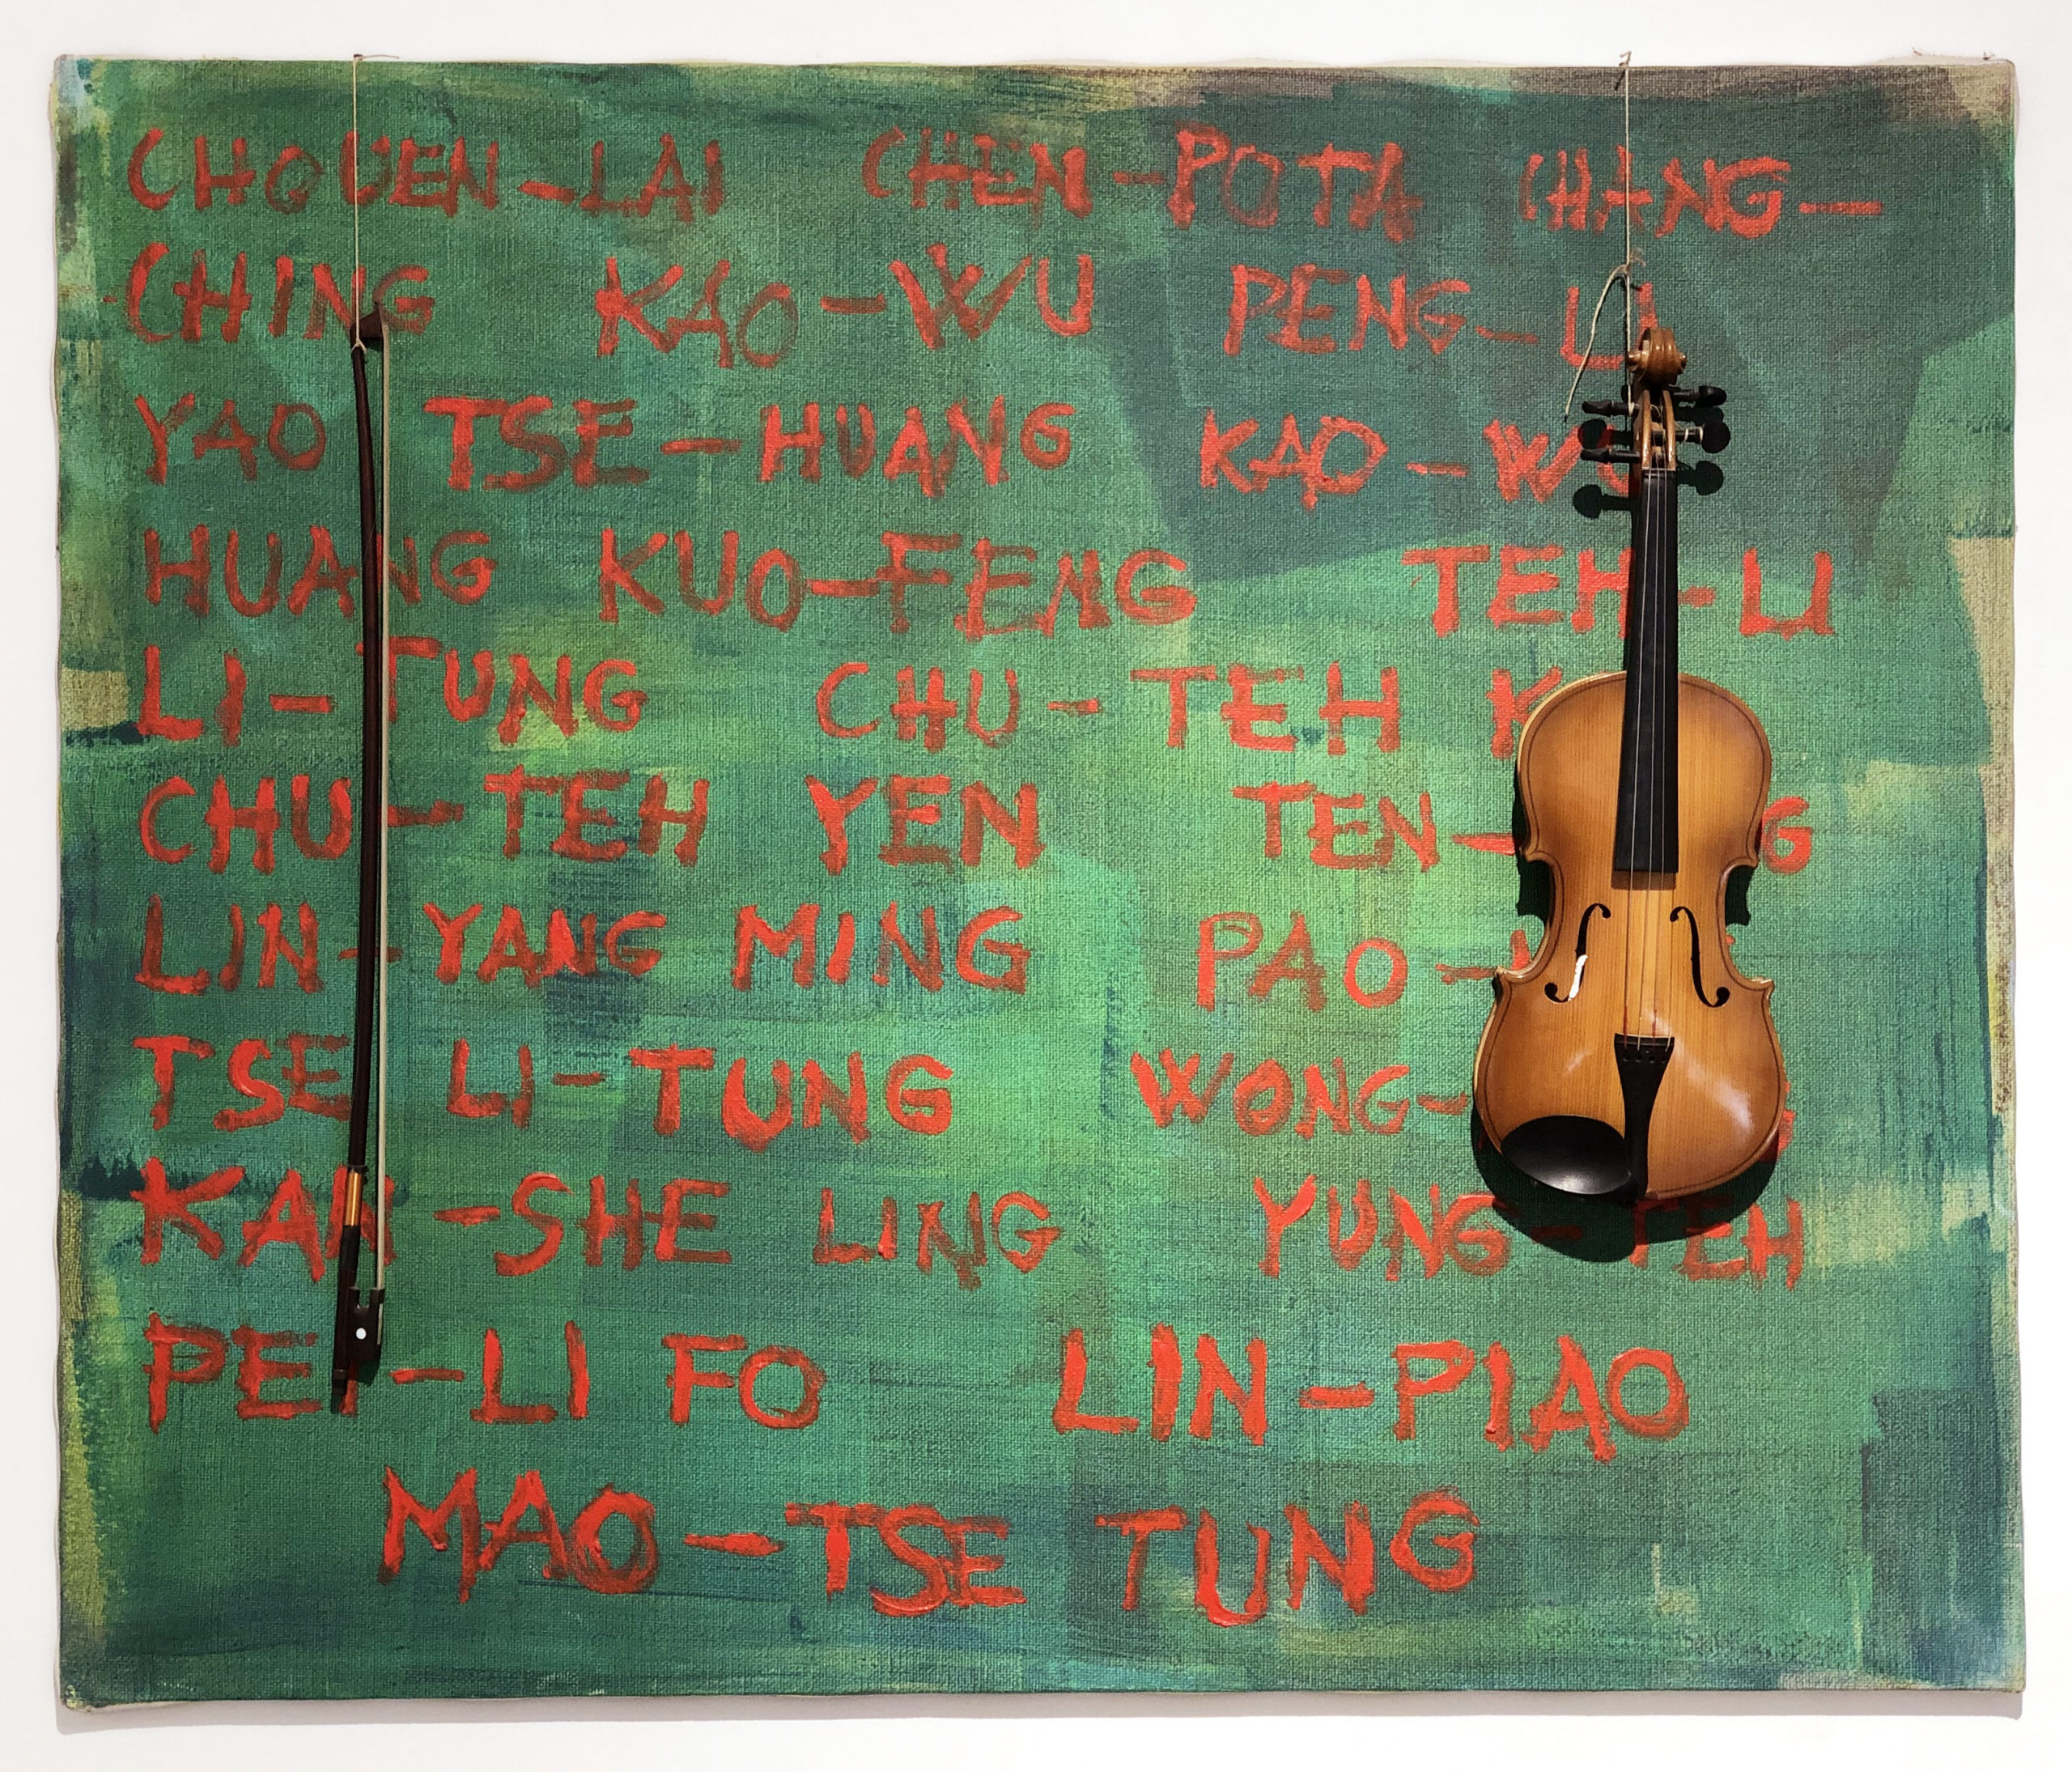 Franco Verdi-Sarenco, Cosa resta (Bilder zum horen), 1983, acrilico su tela + violino, 121 x 100 cm